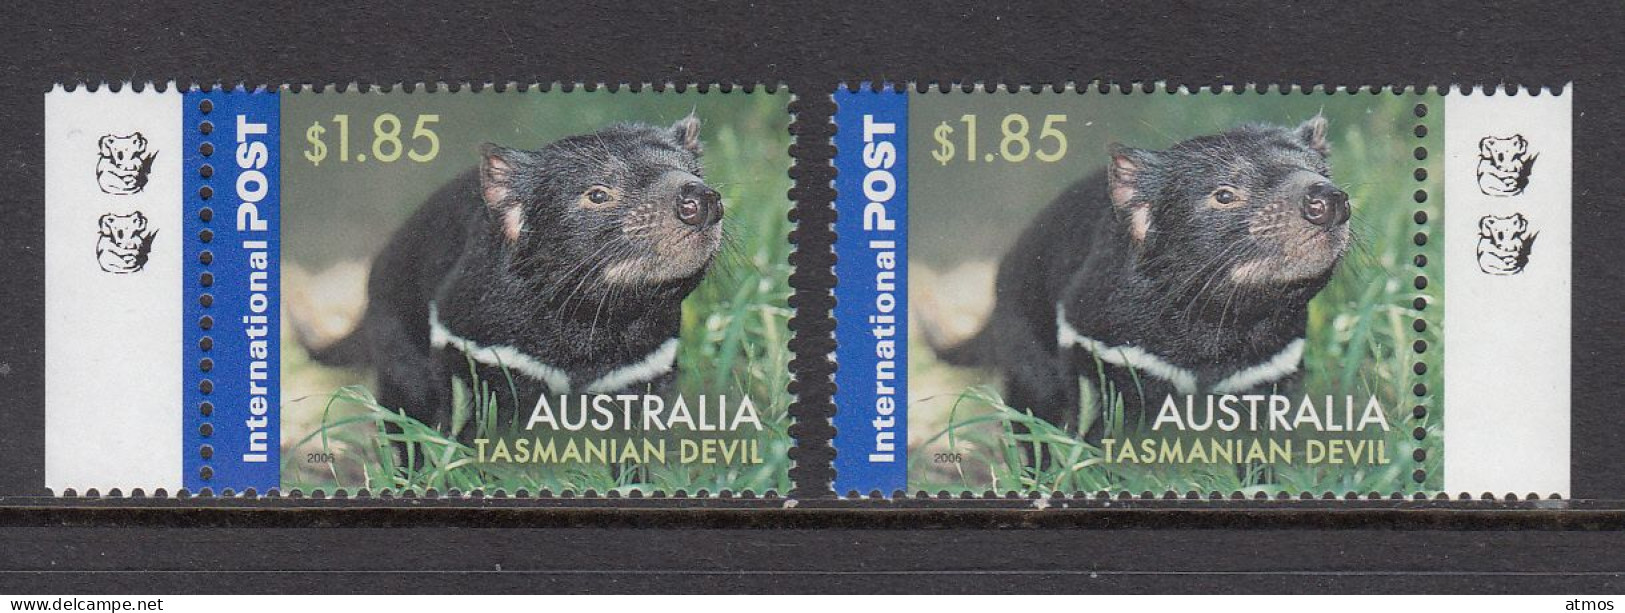 Australia MNH Michel Nr 2534 From 2006 Reprint 2 Koala - Mint Stamps